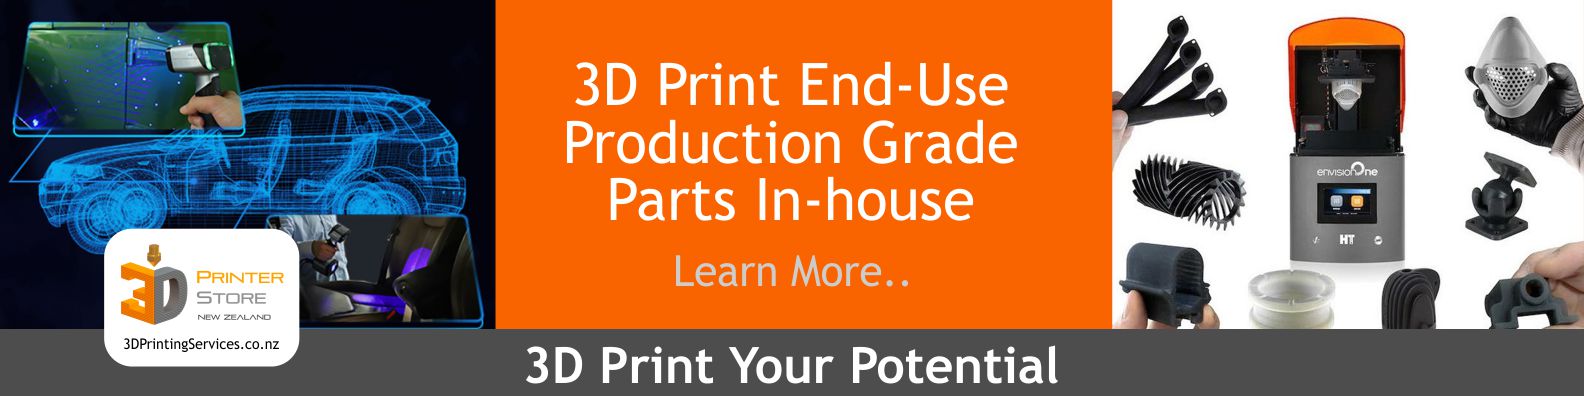 3D Print Professional Grade End Use Parts